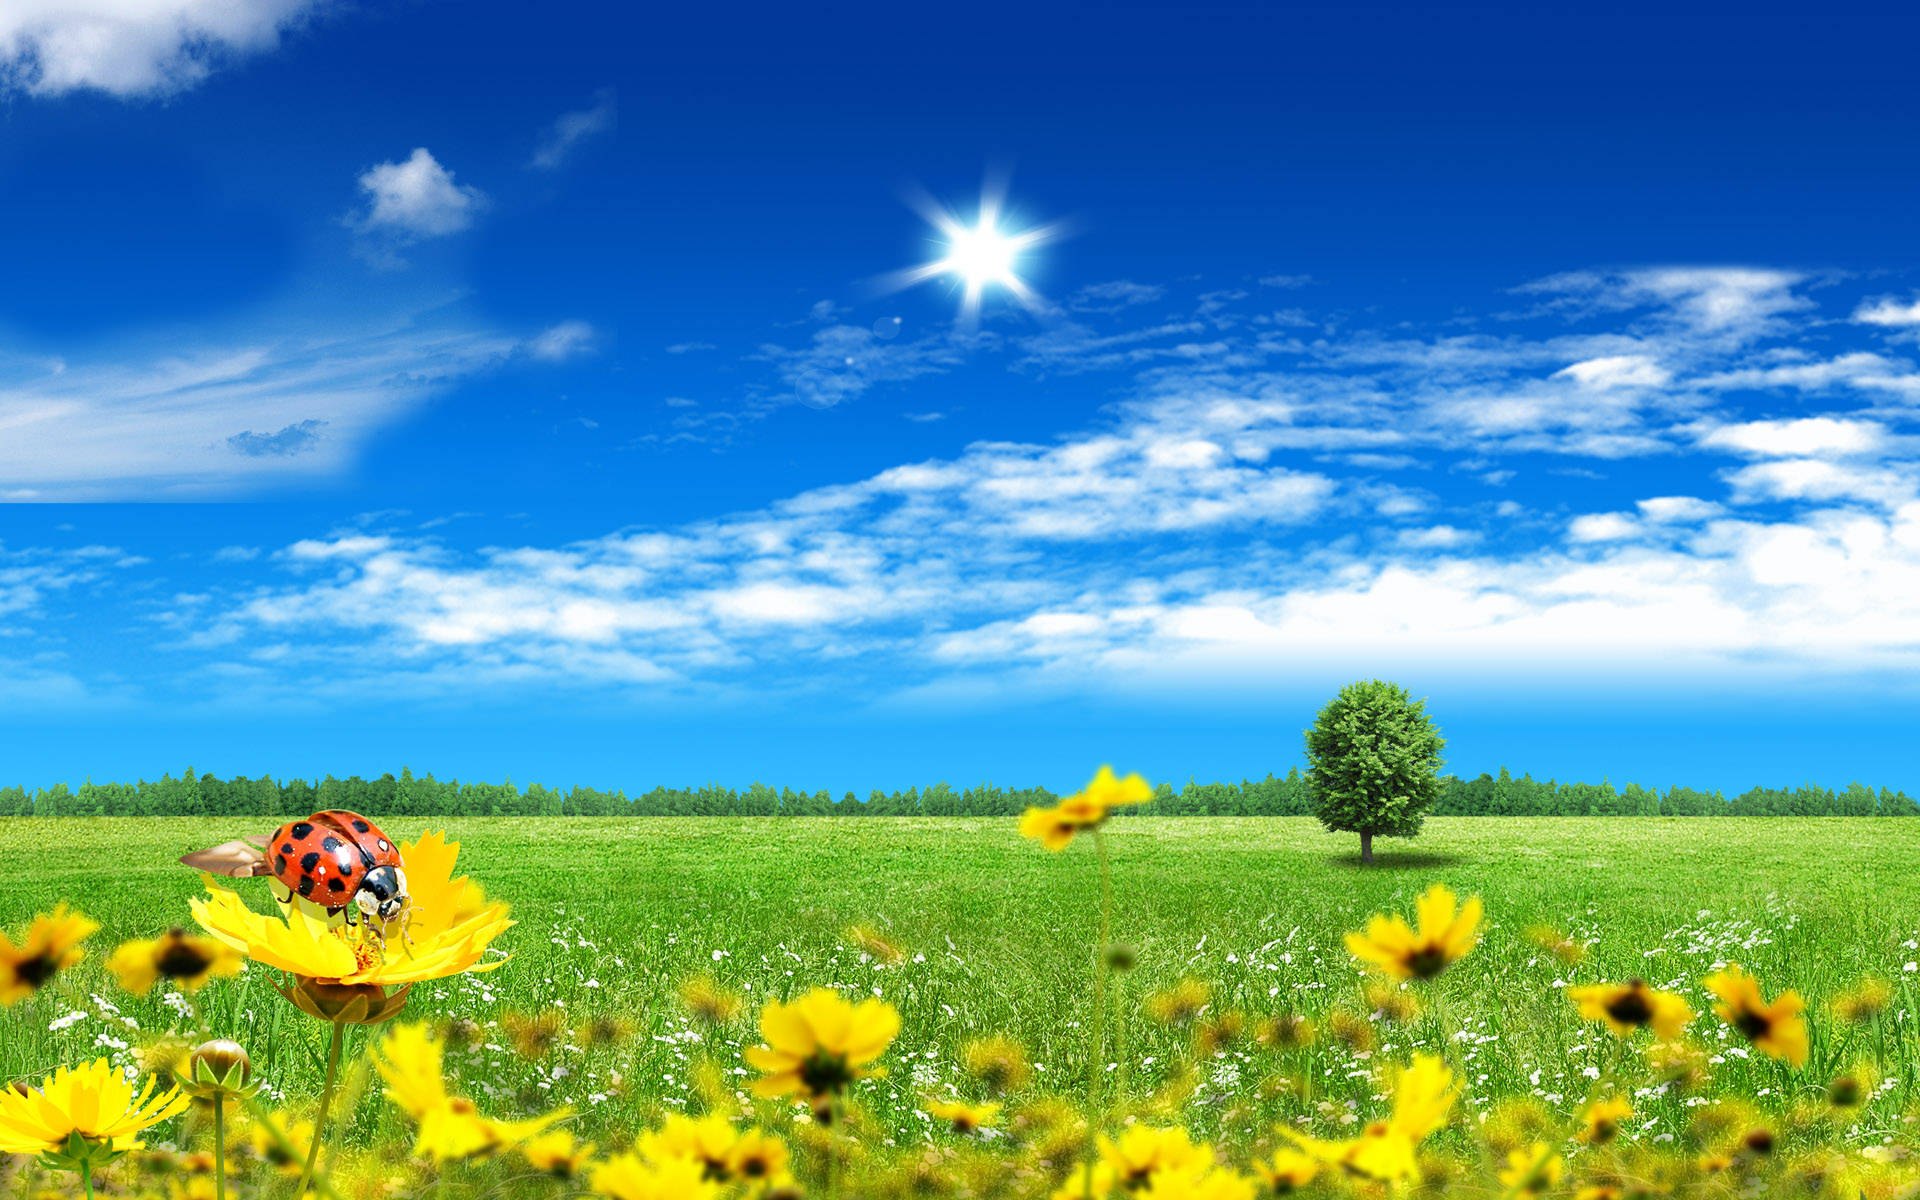  mi9comfree summer fantasy landscape for desktop wallpaper 80967html